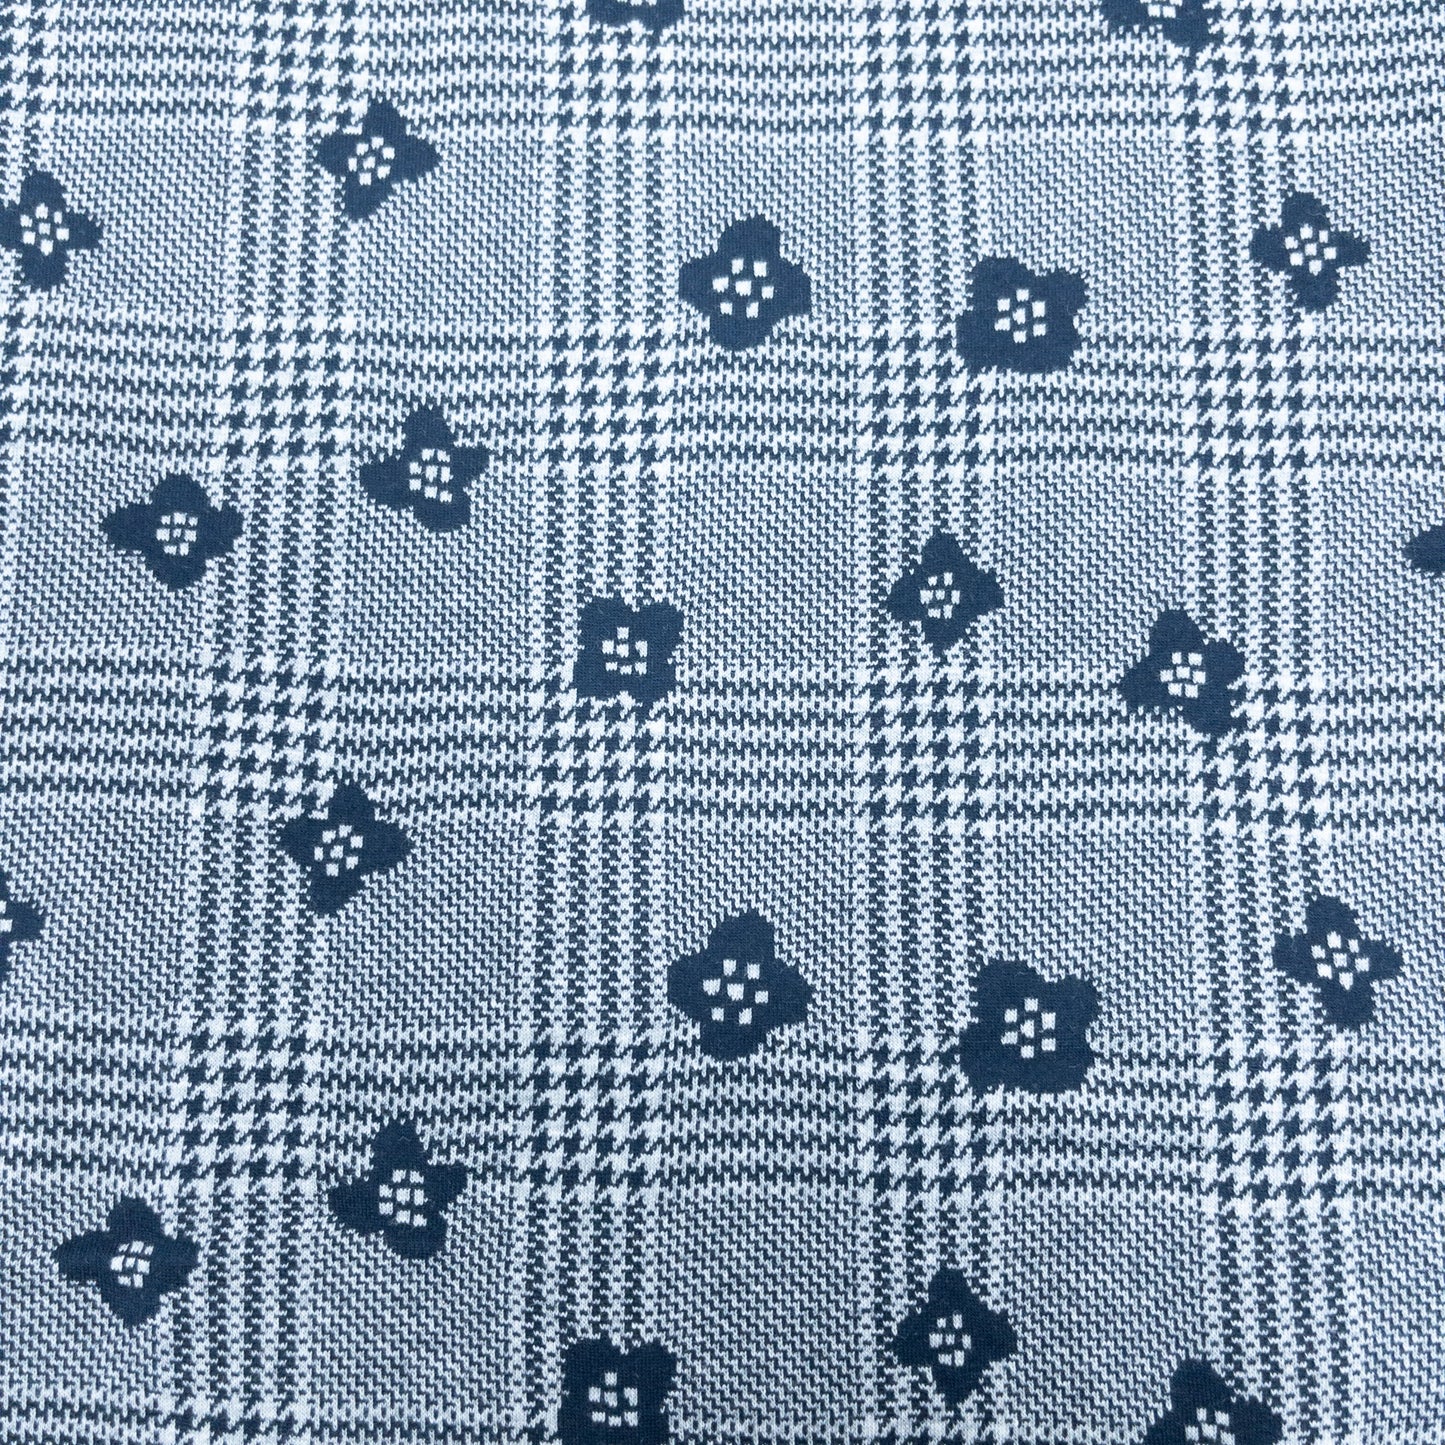 maffon | tartan floral navy gray 英倫格紋花卉 深藍+灰色 | cotton jacquard knit 雙面純棉提花針織 - 160cm